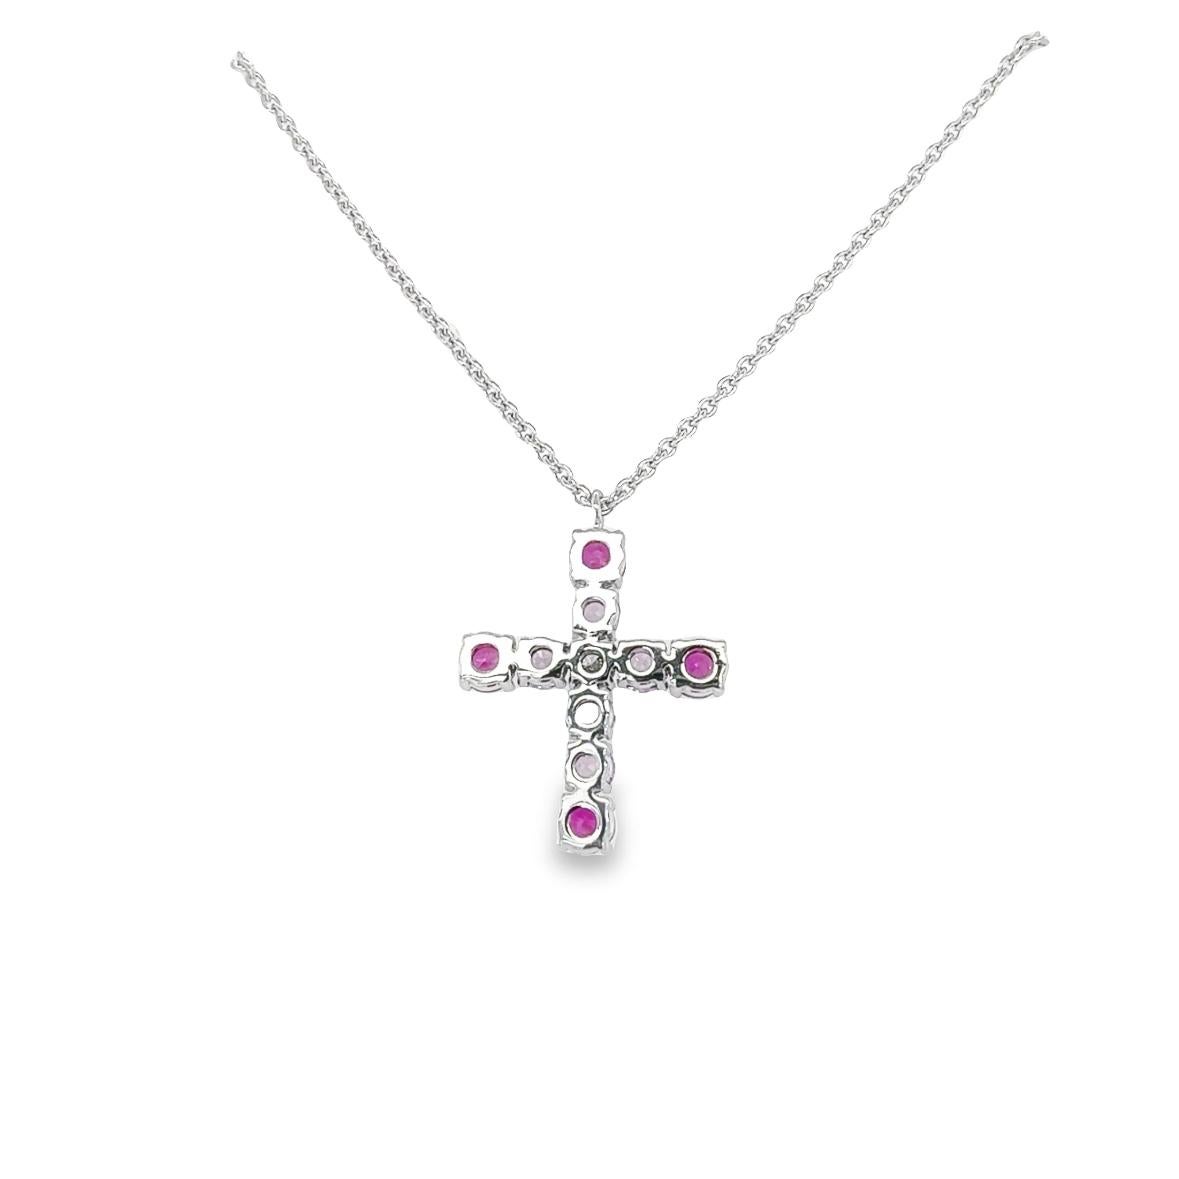 Contemporary Cross pendant necklace For Sale